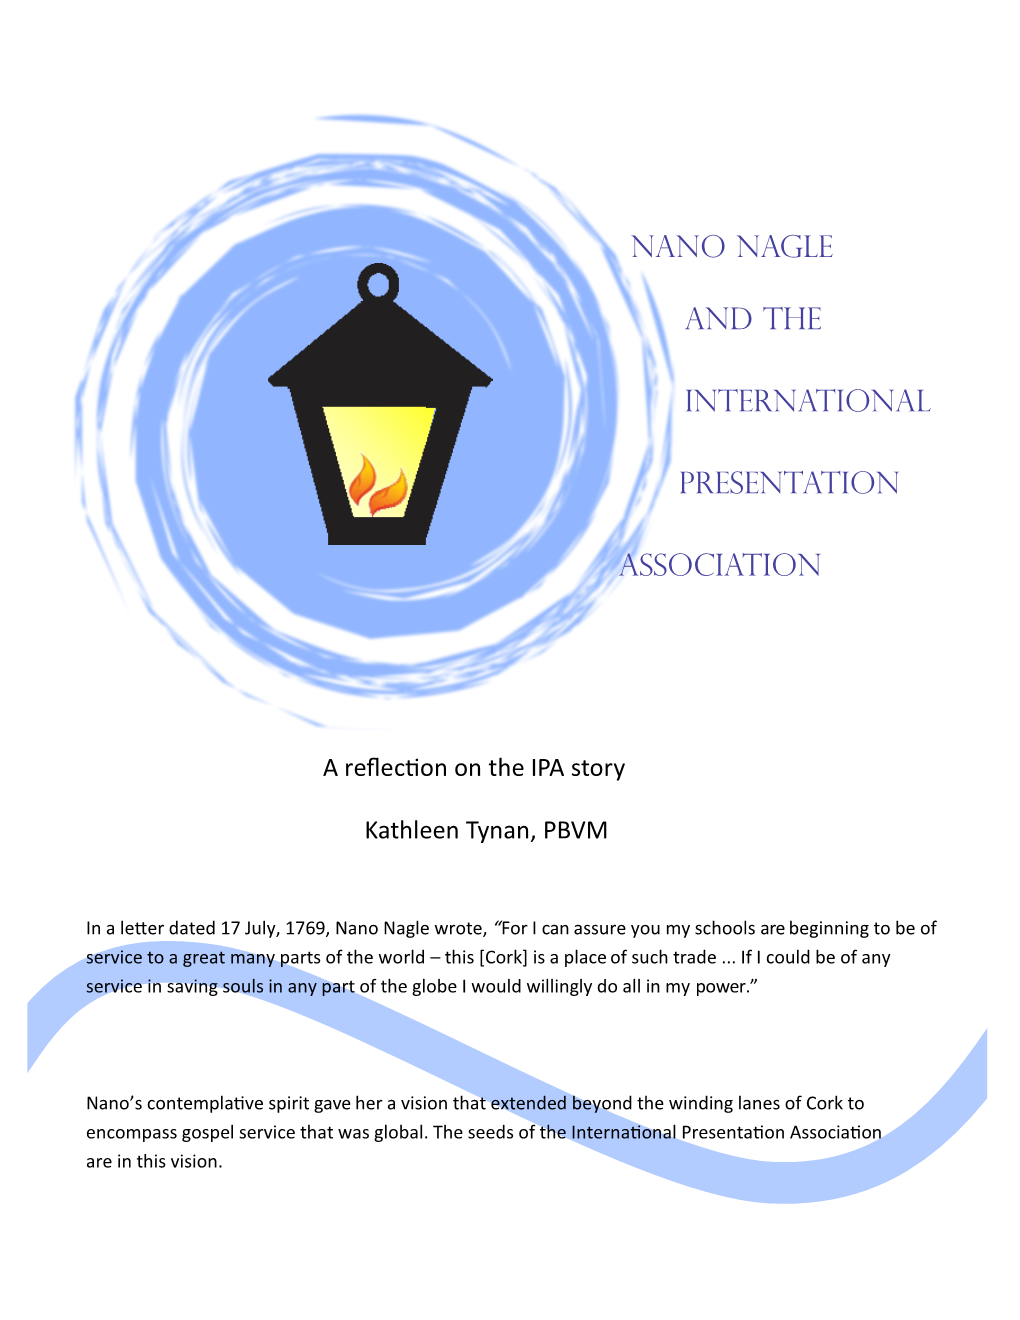 Nano Nagle and the International Presentation Association